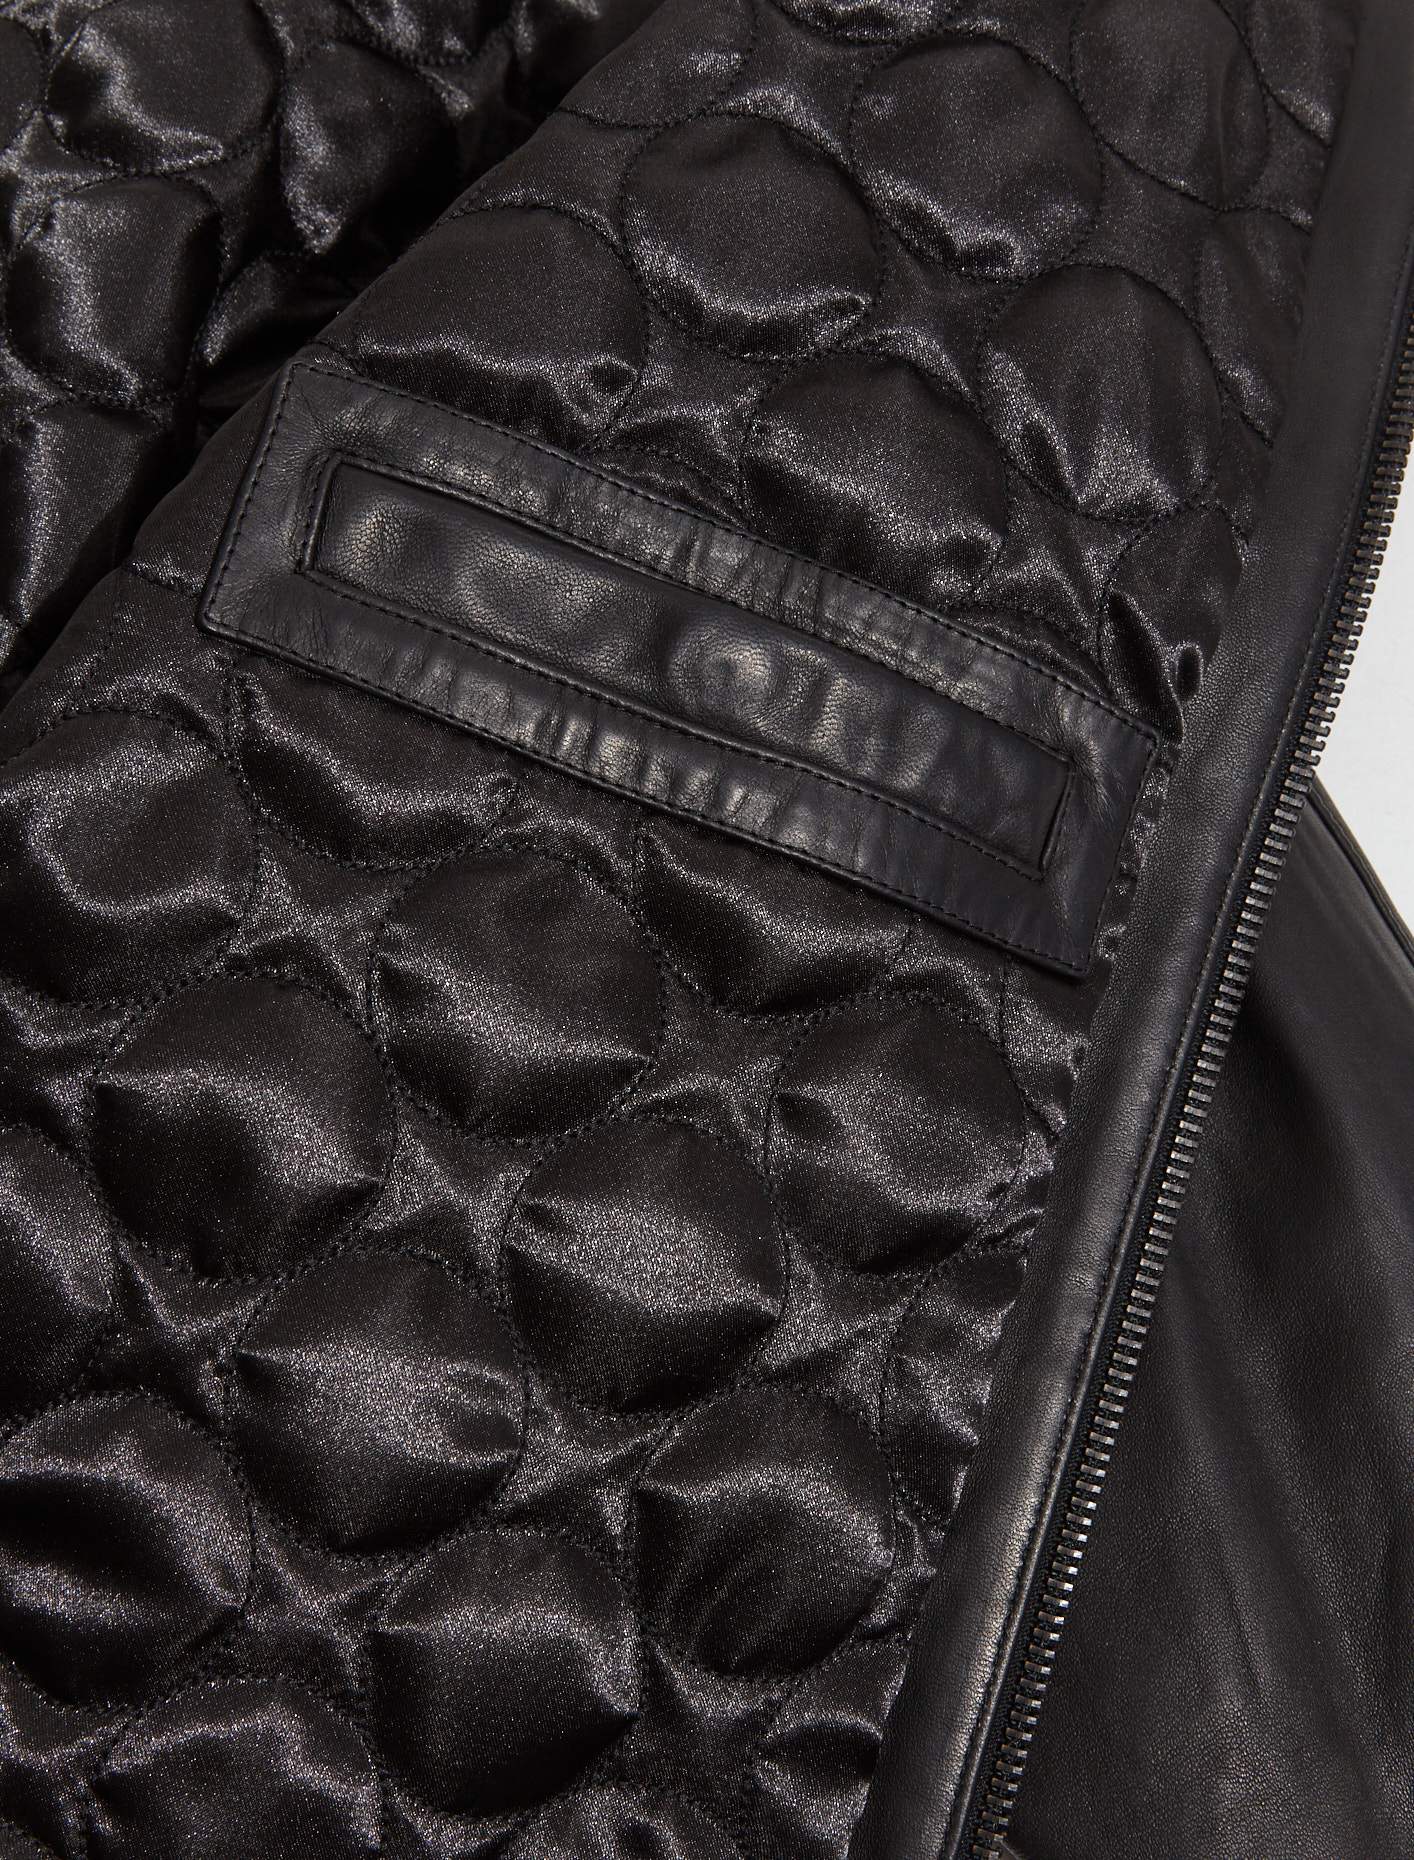 Leather Racer Jacket in Black